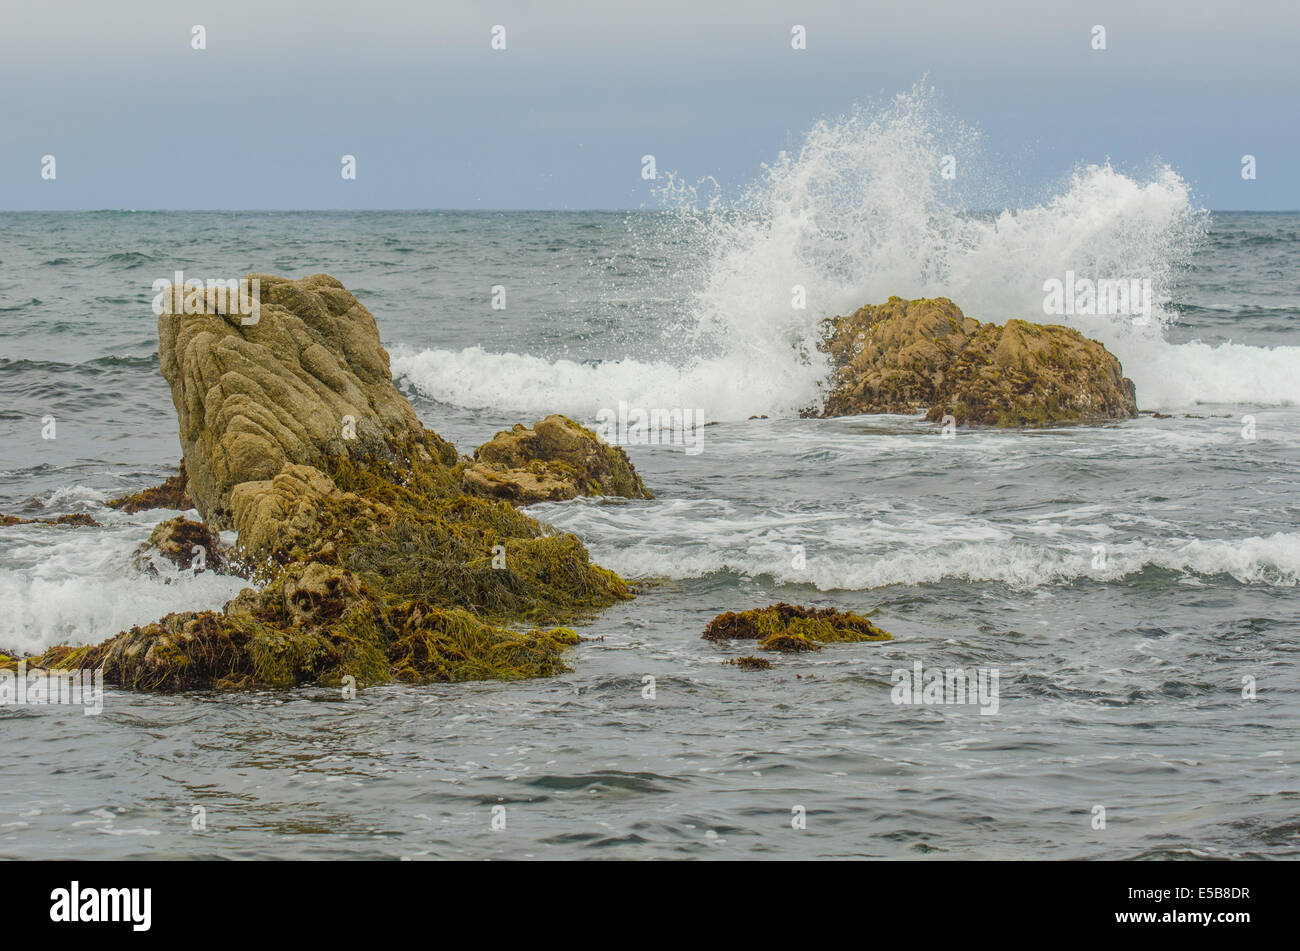 Waves breaking on rocks, Asilomar beach, Monterey California Stock Photo